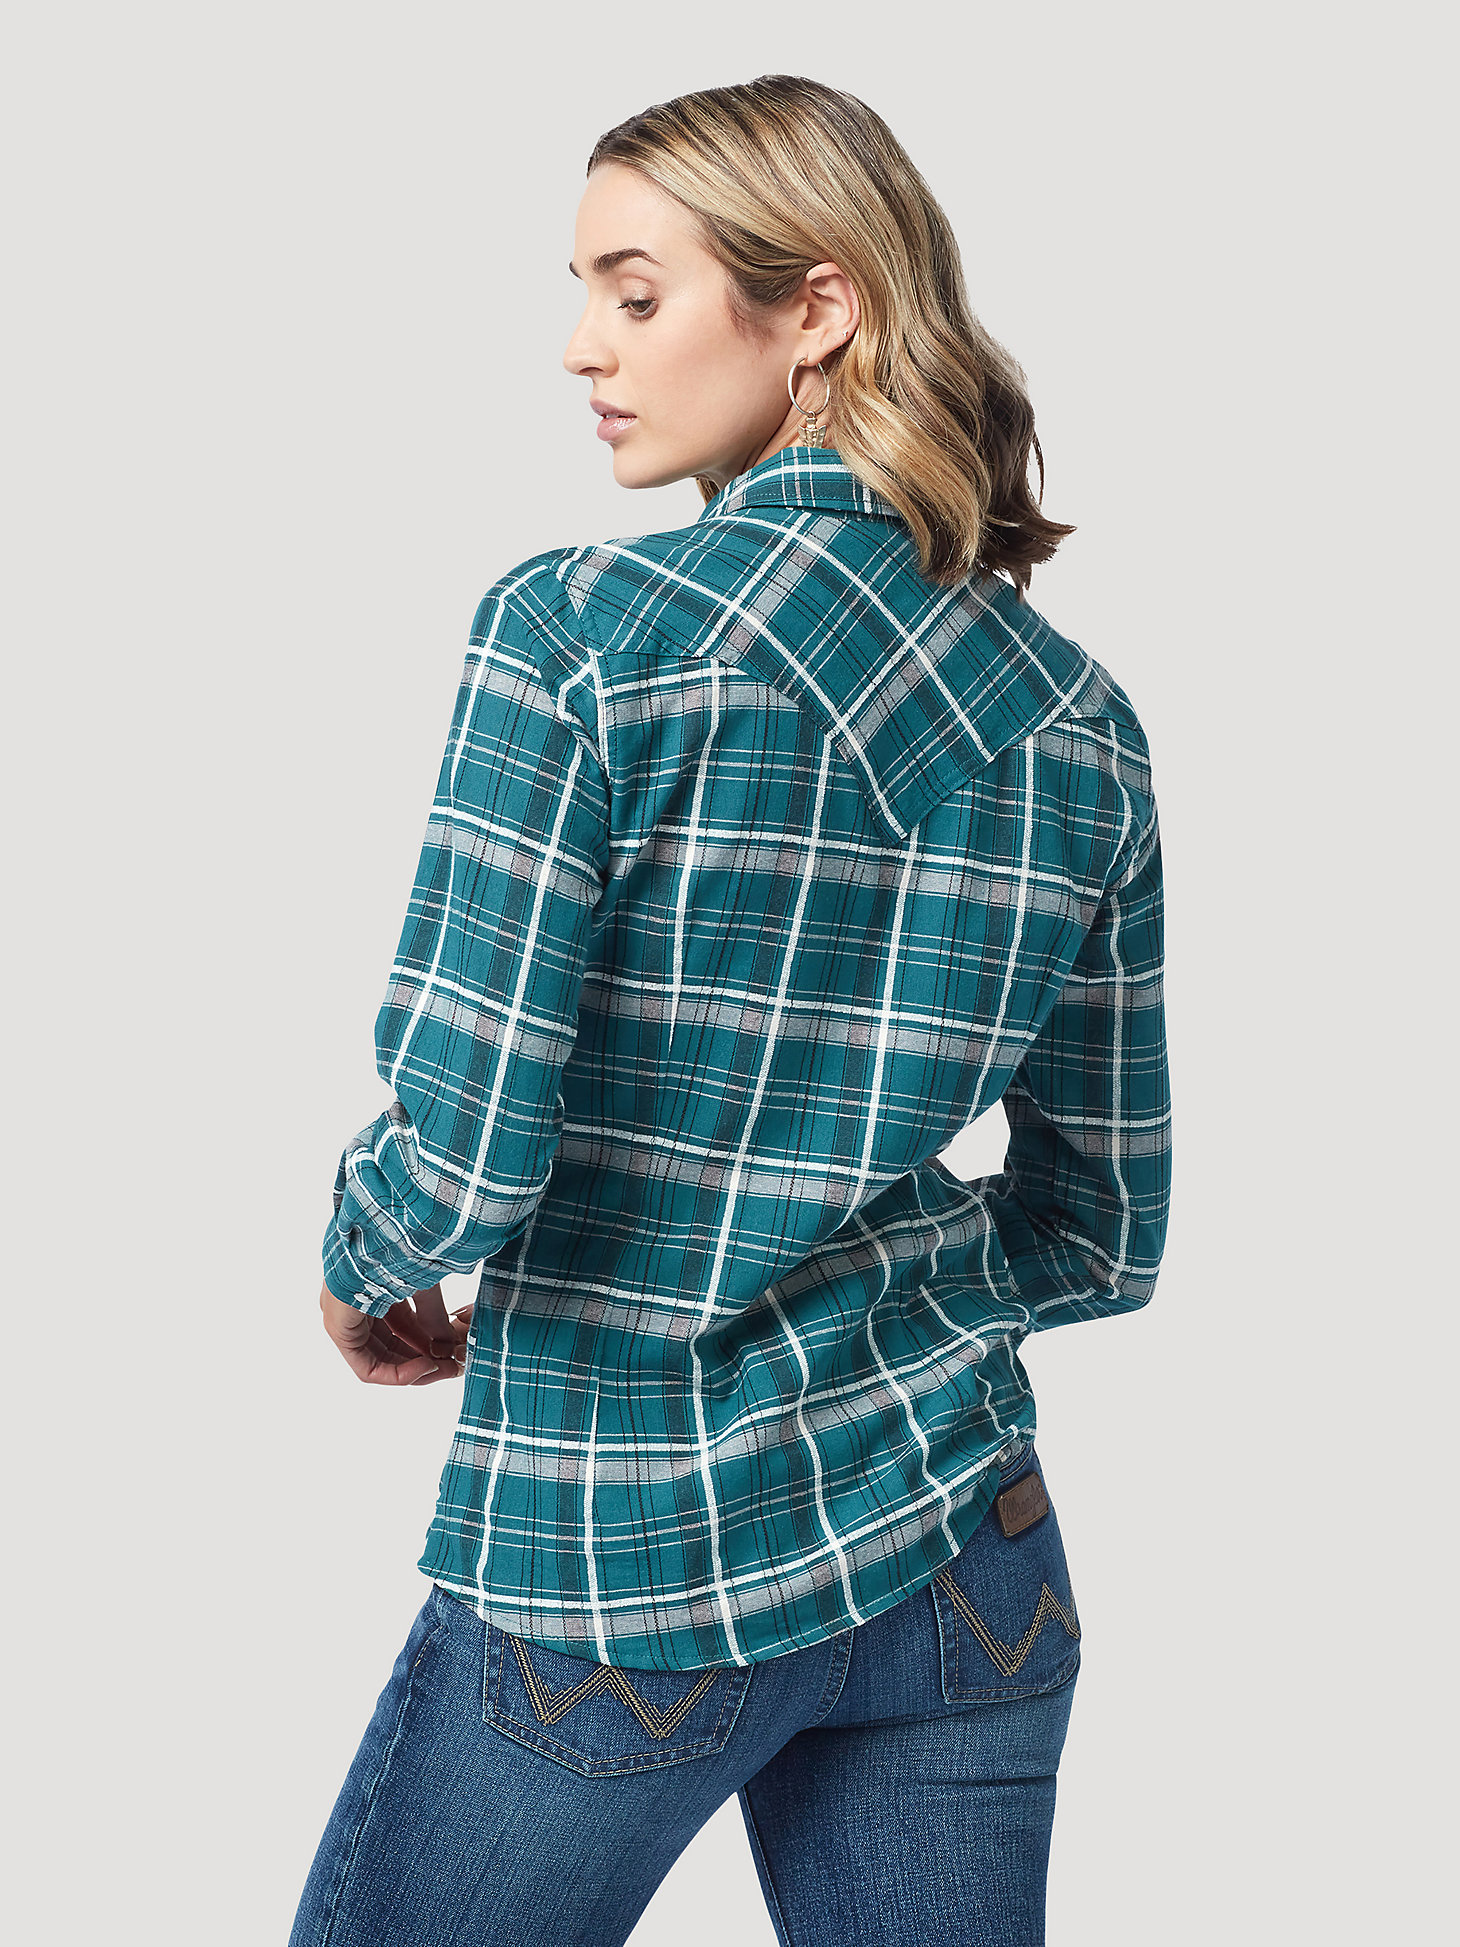 Women's Wrangler Retro® Textured Western Snap Shirt in Apatite alternative view 2